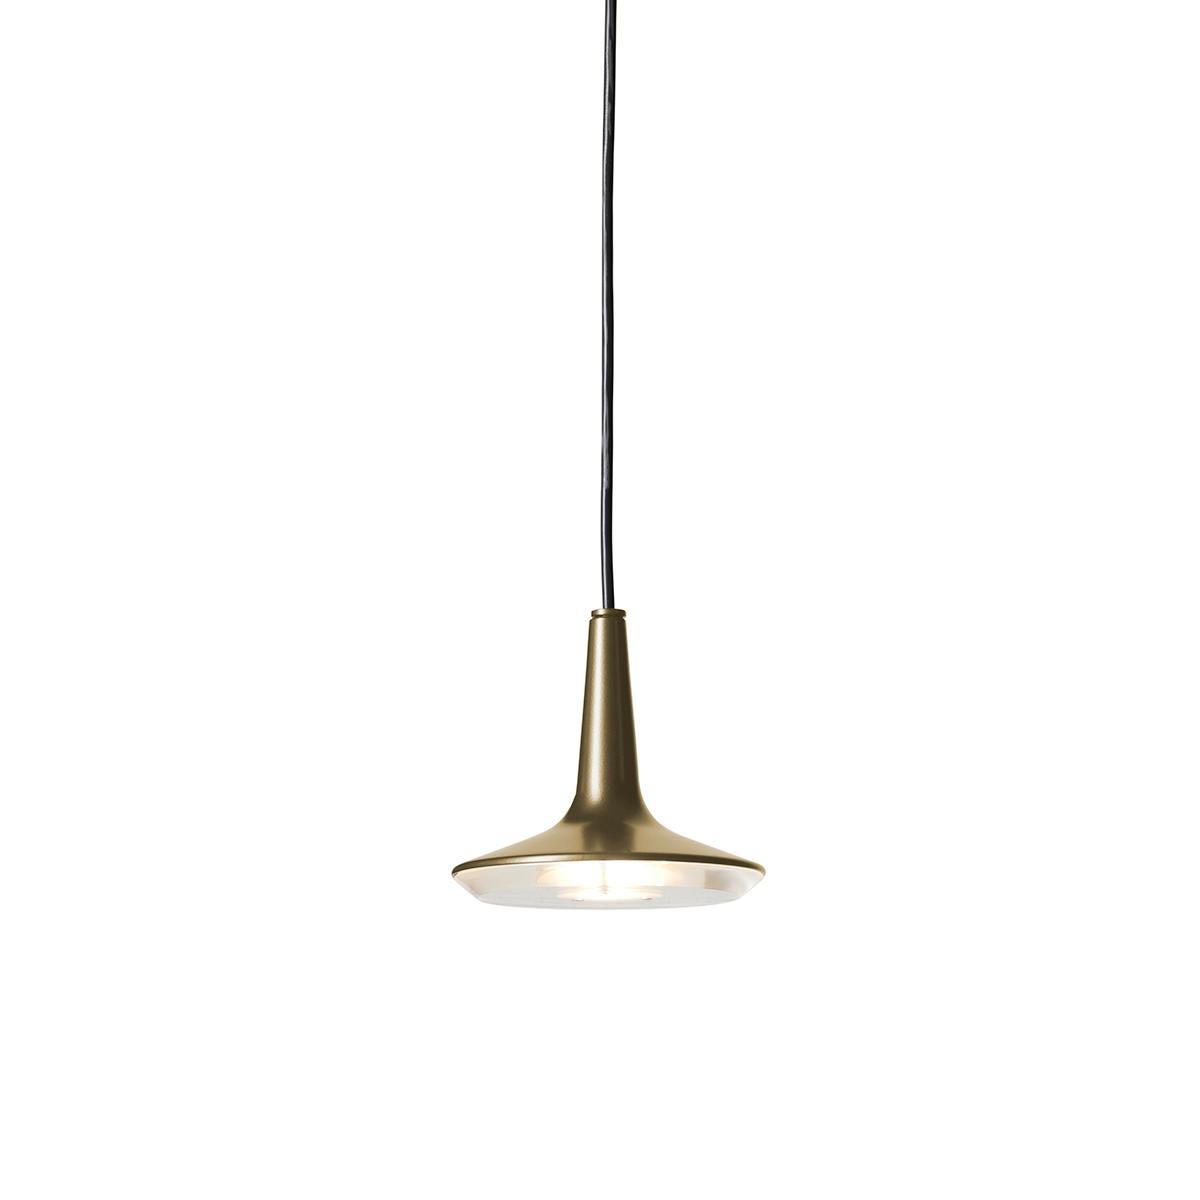 Italian Francesco Rota Suspension Lamp 'Kin' 478 Satin Gold by Oluce For Sale